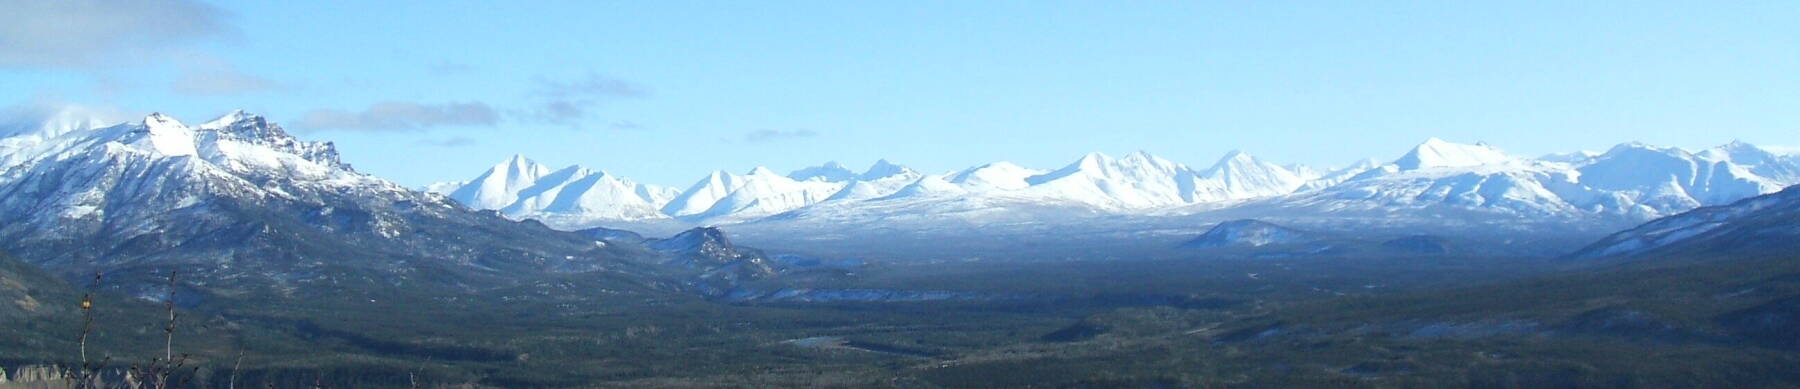 Alaska Range of snow-capped mountains.